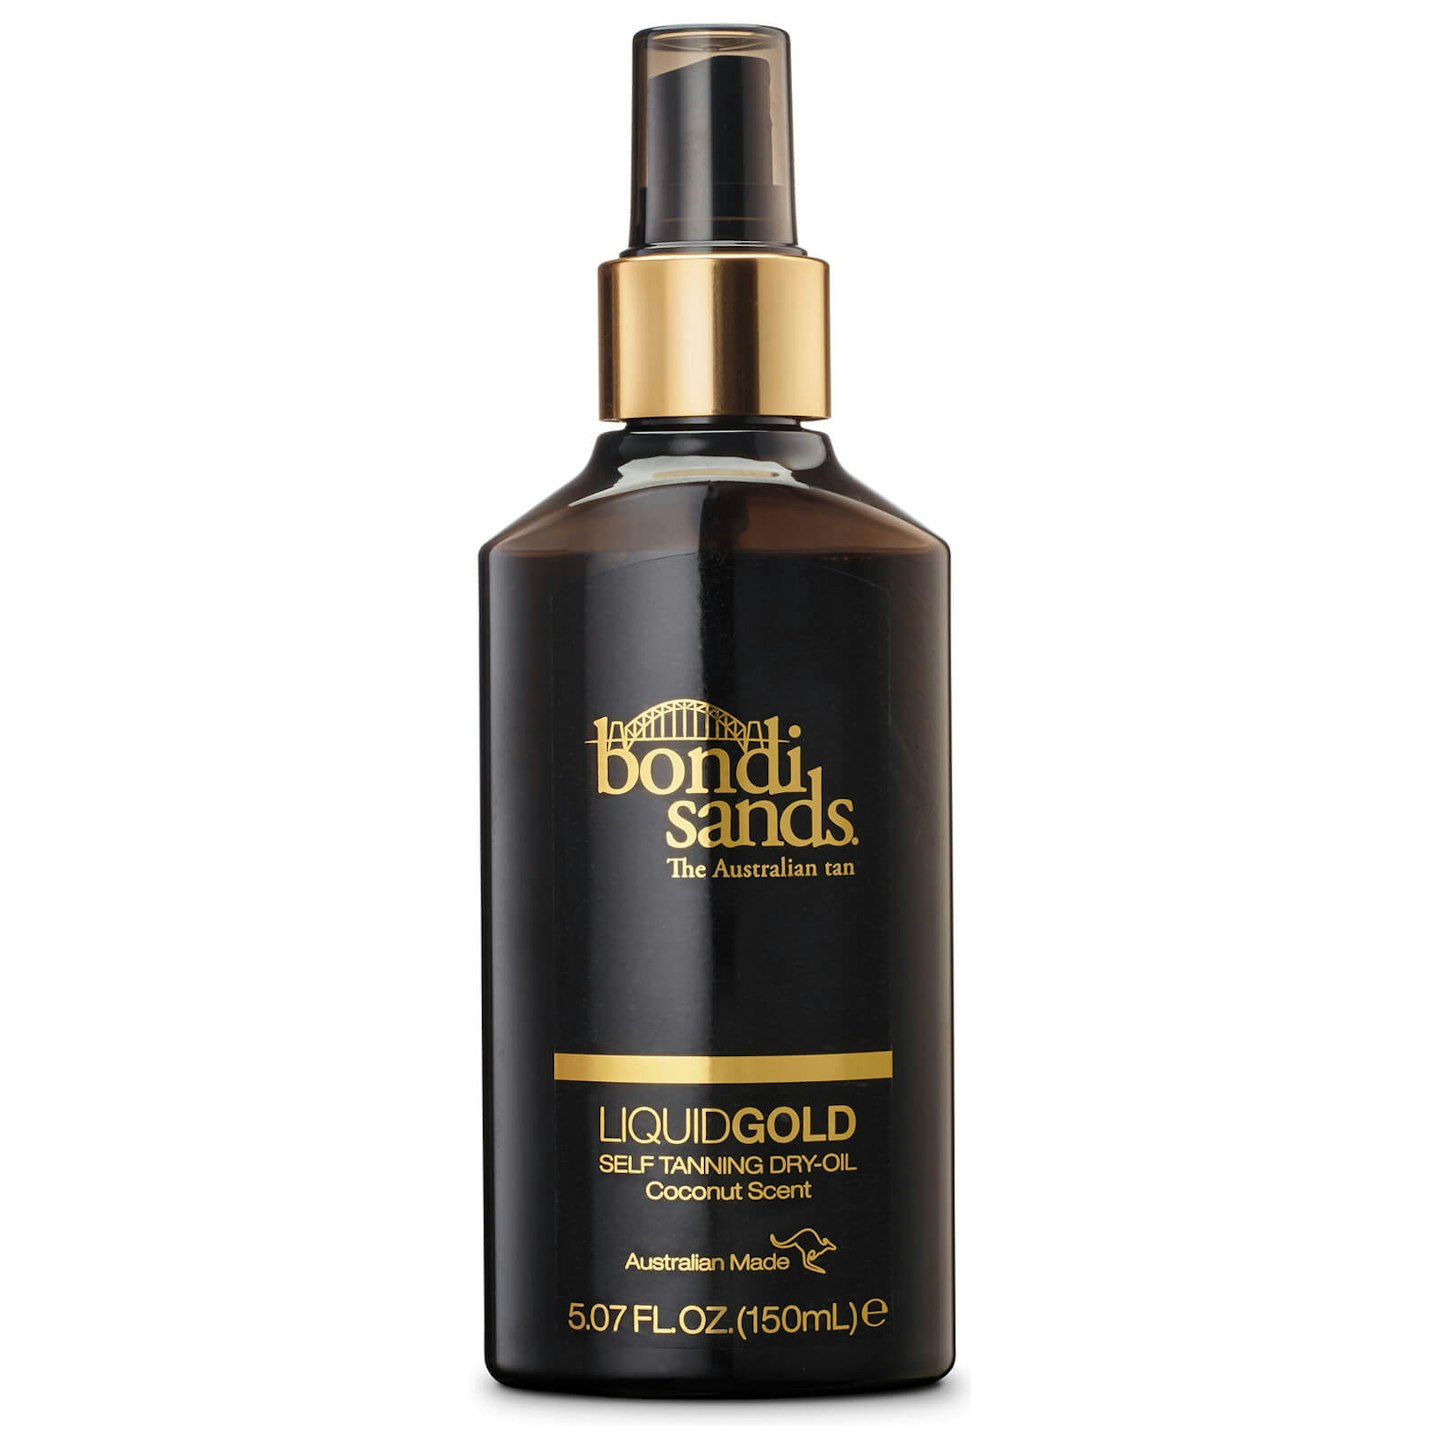 Bondi Sands Liquid Gold Self Tanning Dry Oil, £14.99